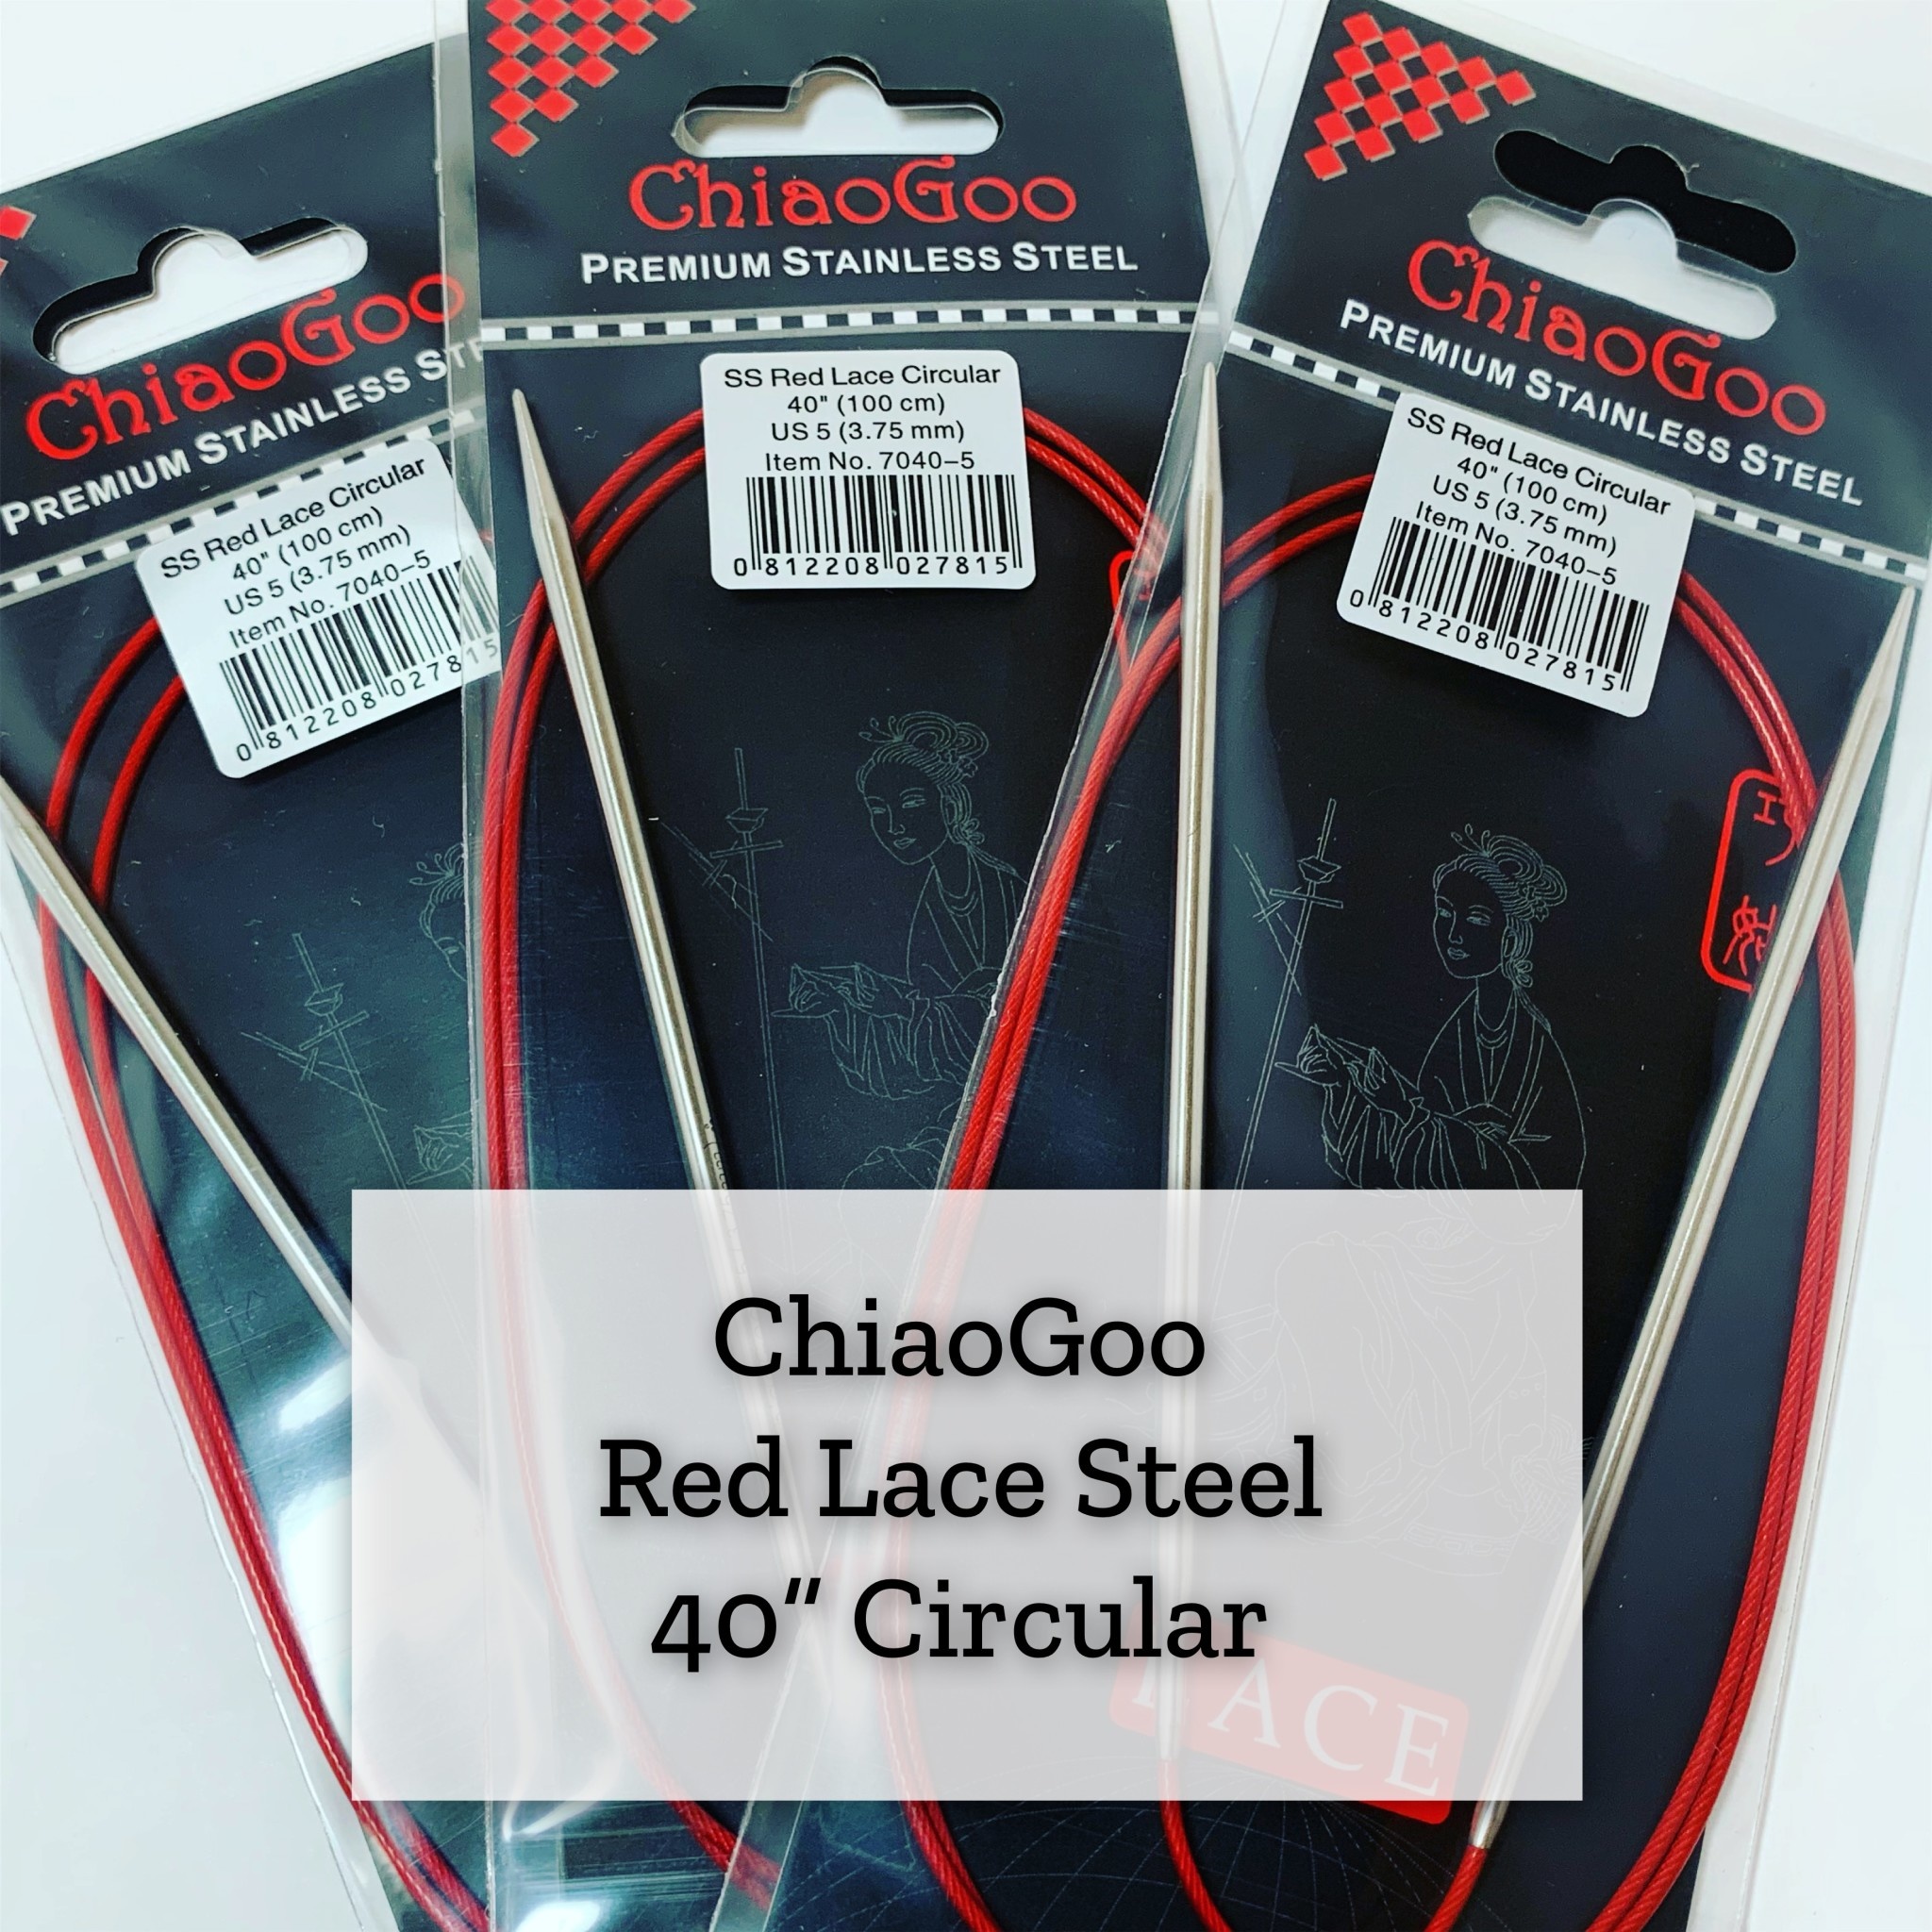 ChiaoGoo Red Lace Steel - 40" 3.5 mm